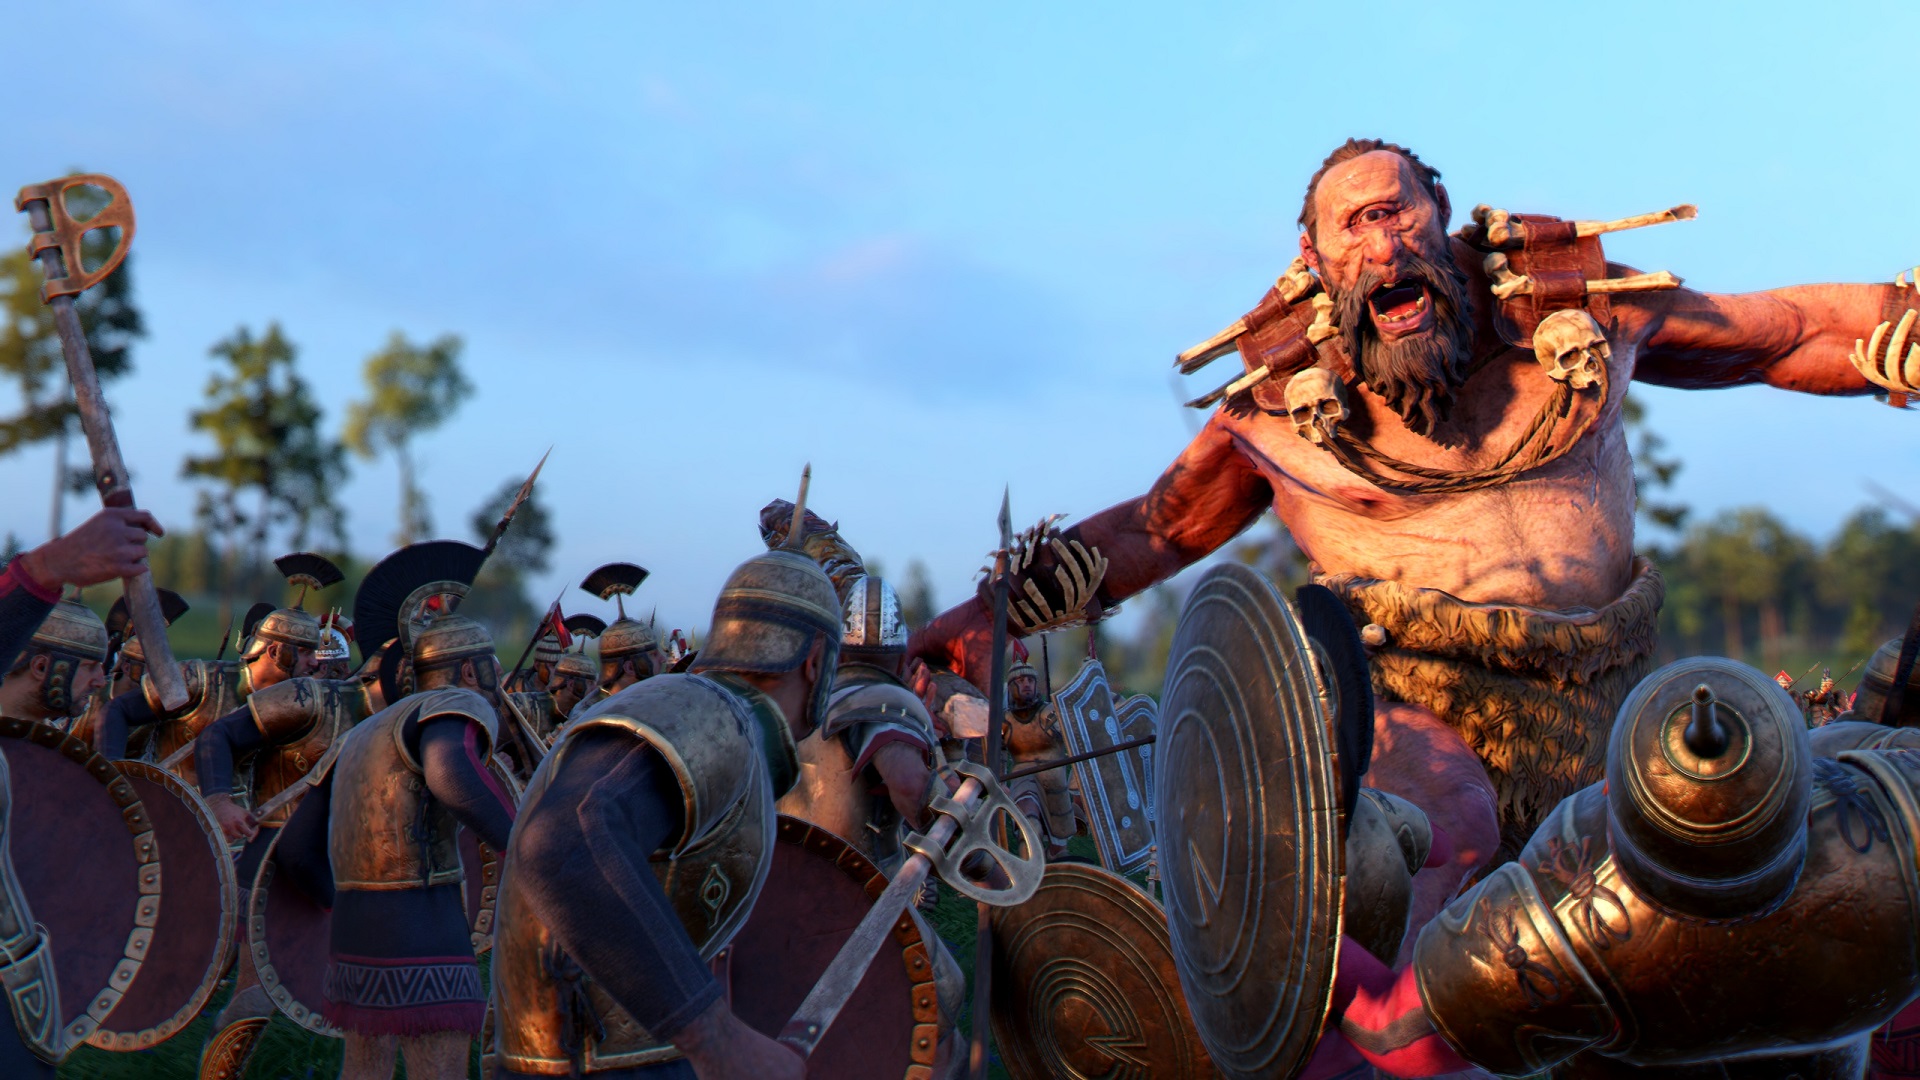 HD desktop wallpaper of A Total War Saga: TROY, depicting intense battle scene with warriors clashing in combat.